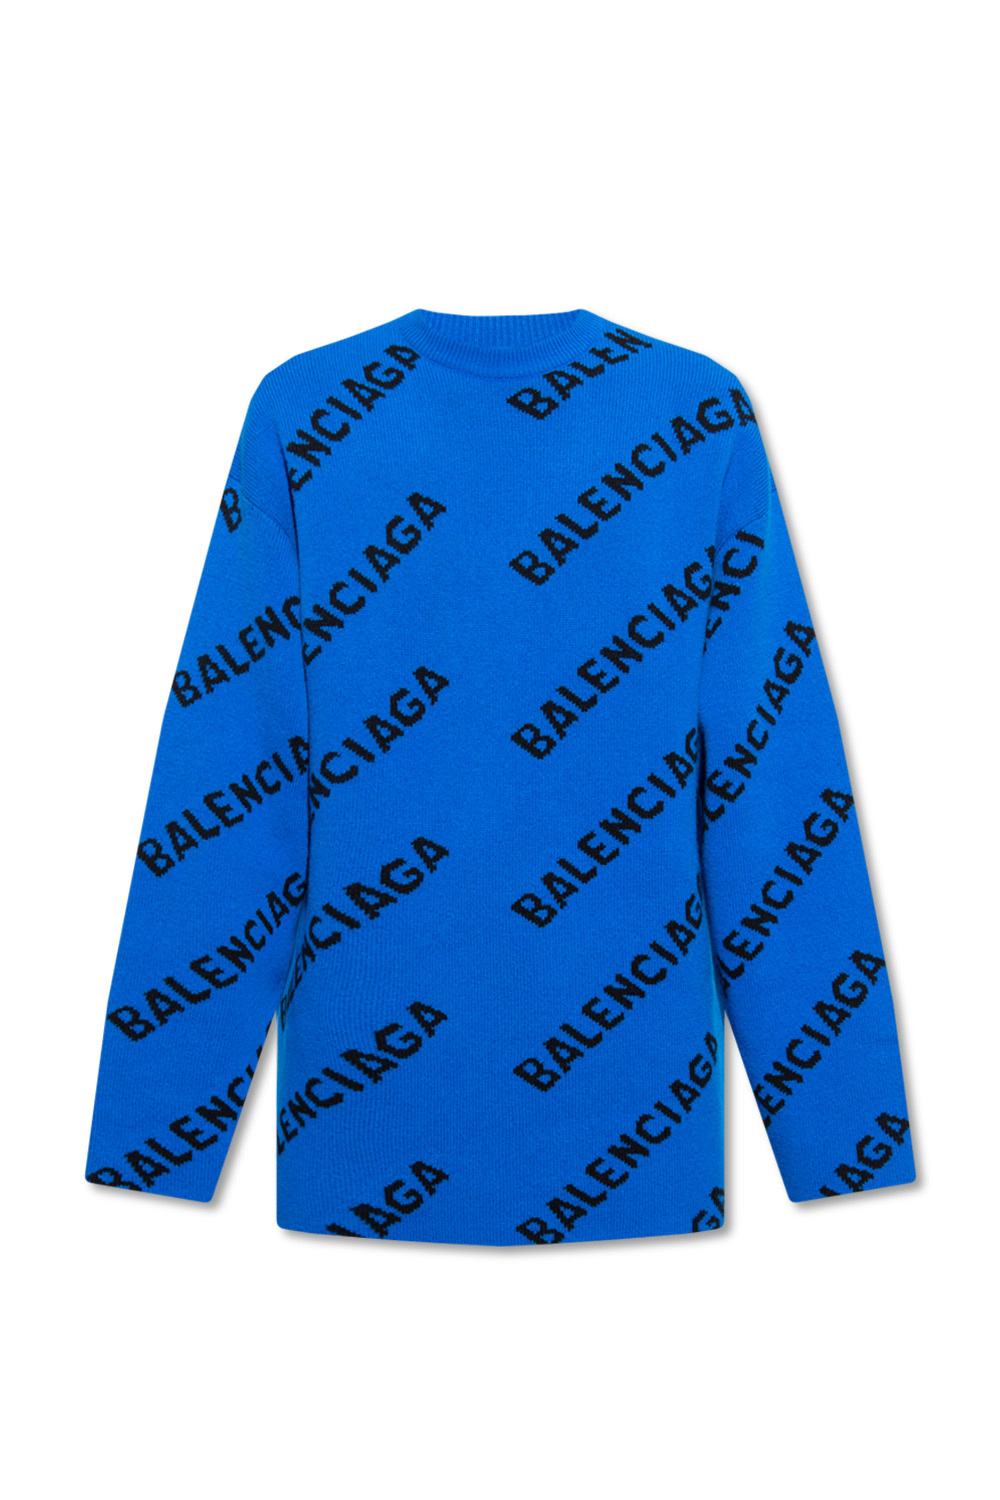 Balenciaga sweater zipped with logo